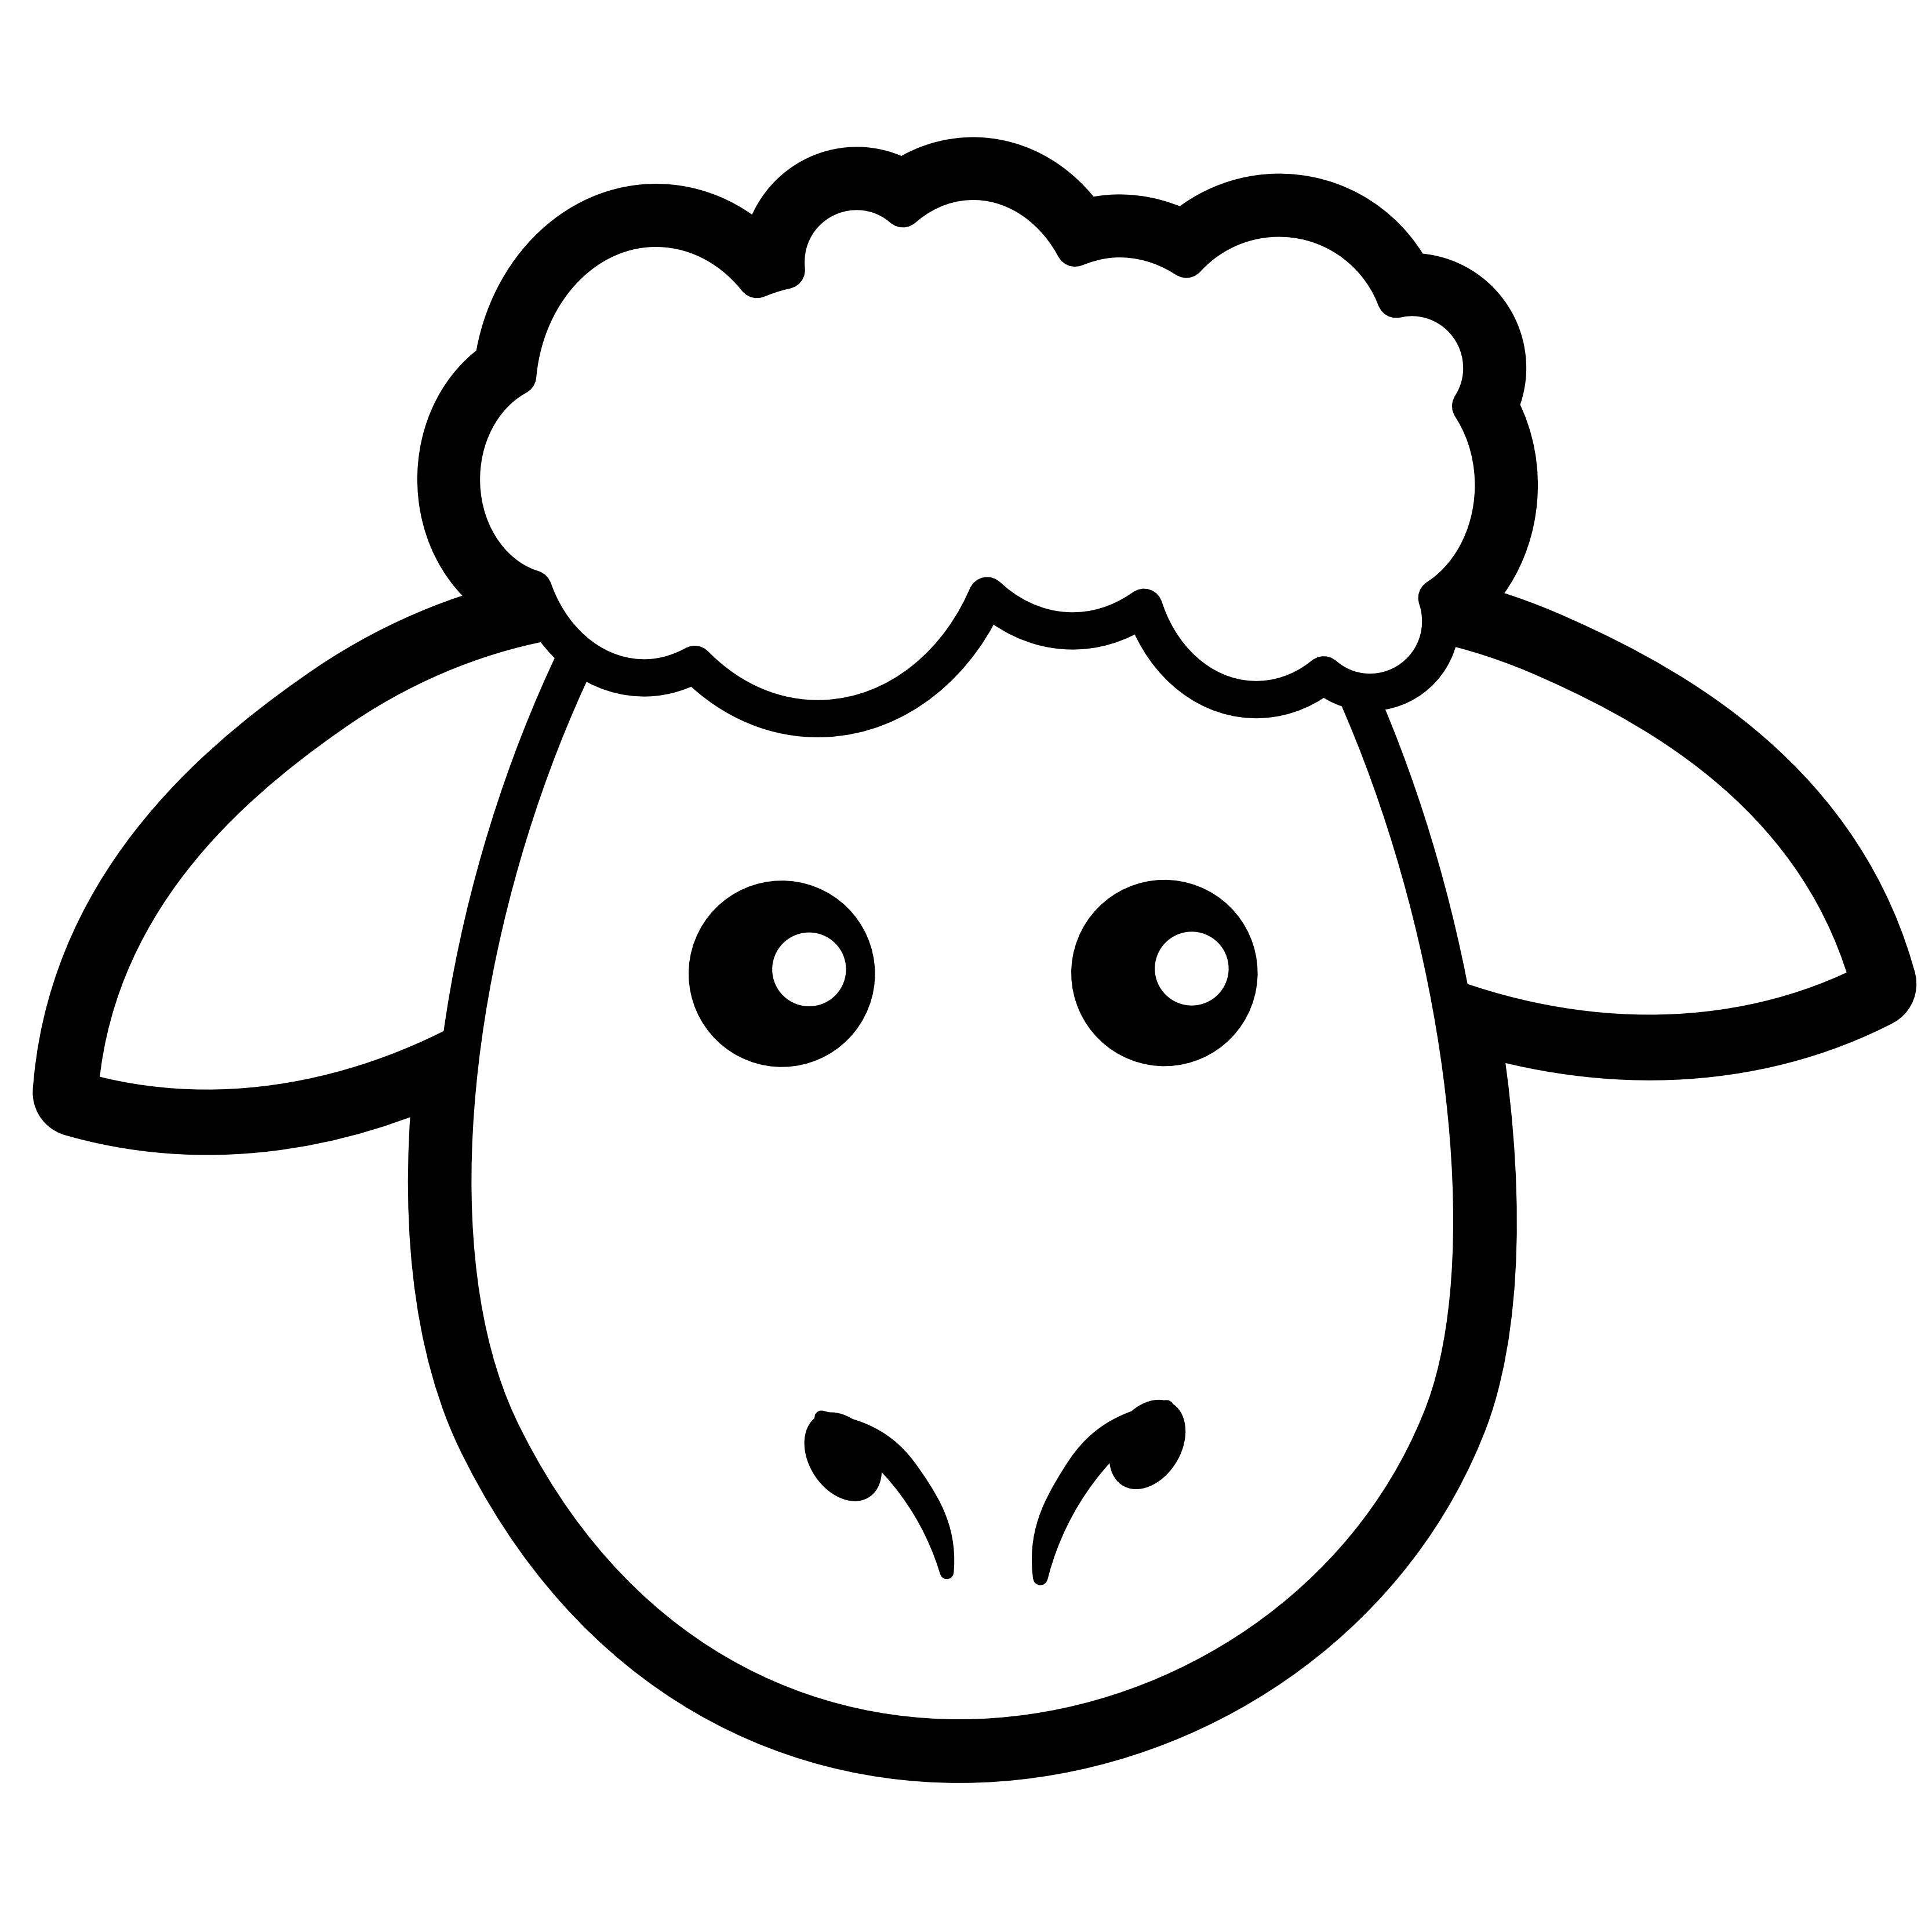 Cow head free download. Clipart sheep lamb